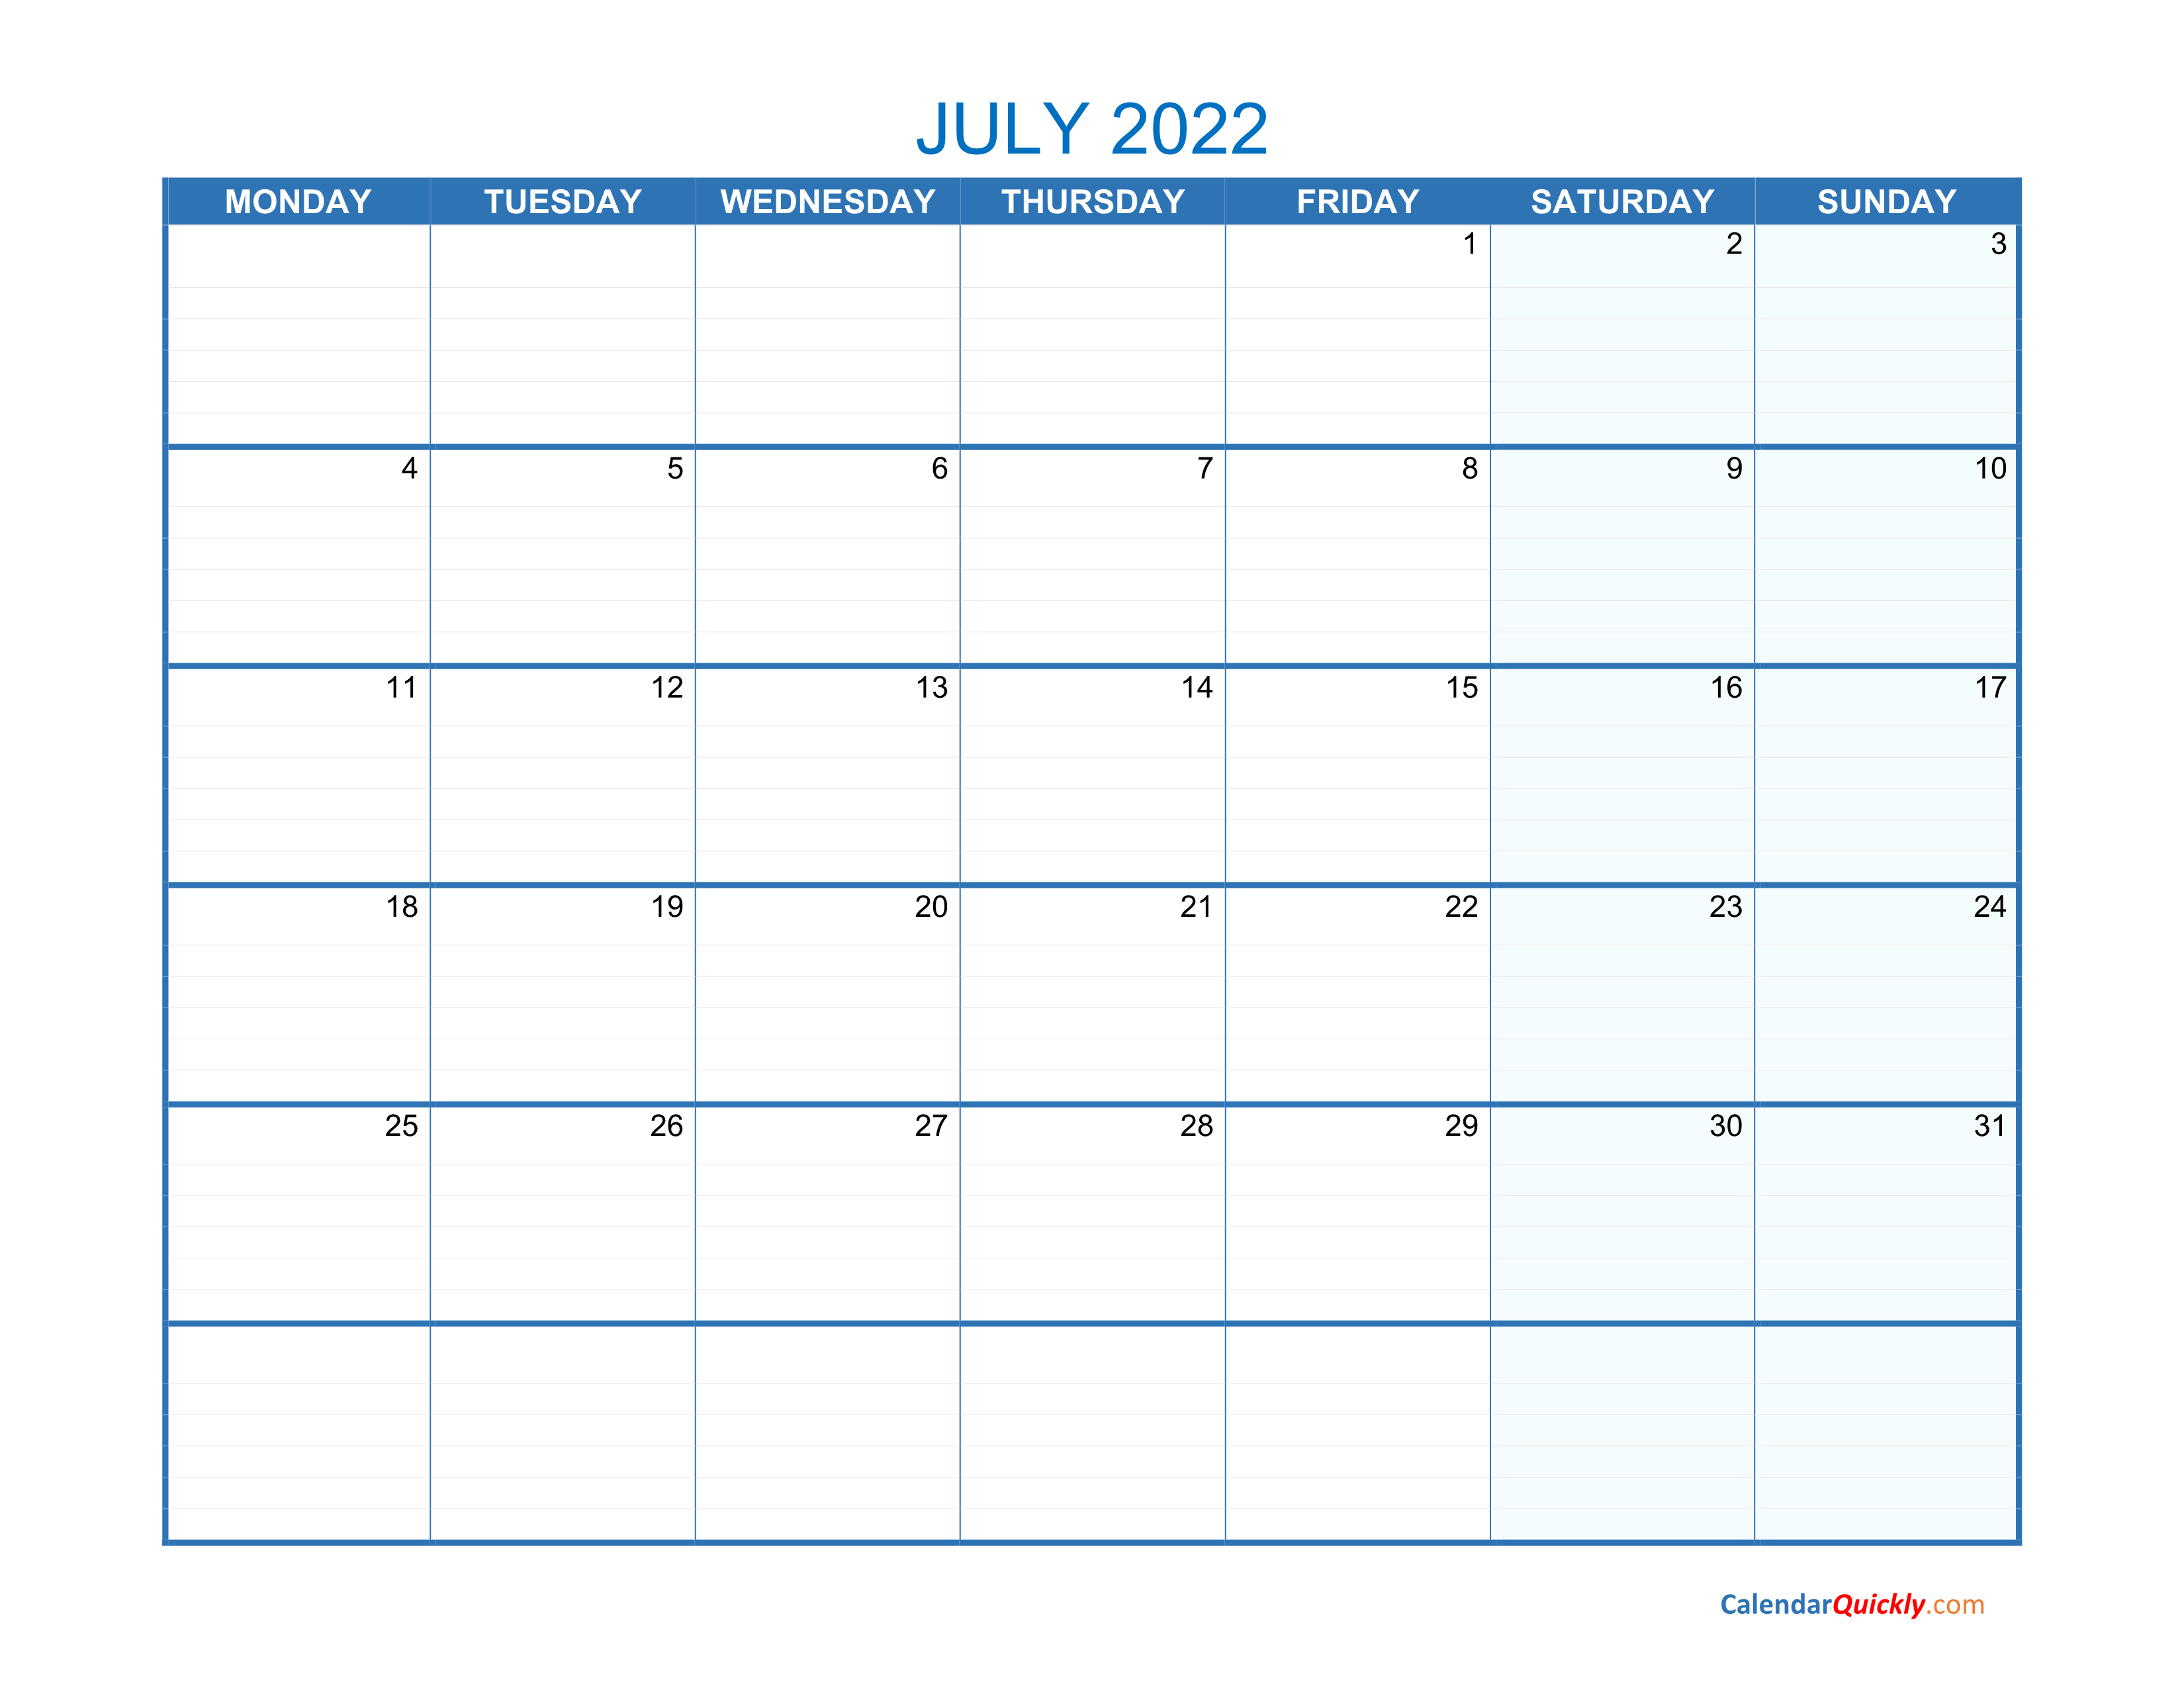 July Monday 2022 Blank Calendar Calendar Quickly